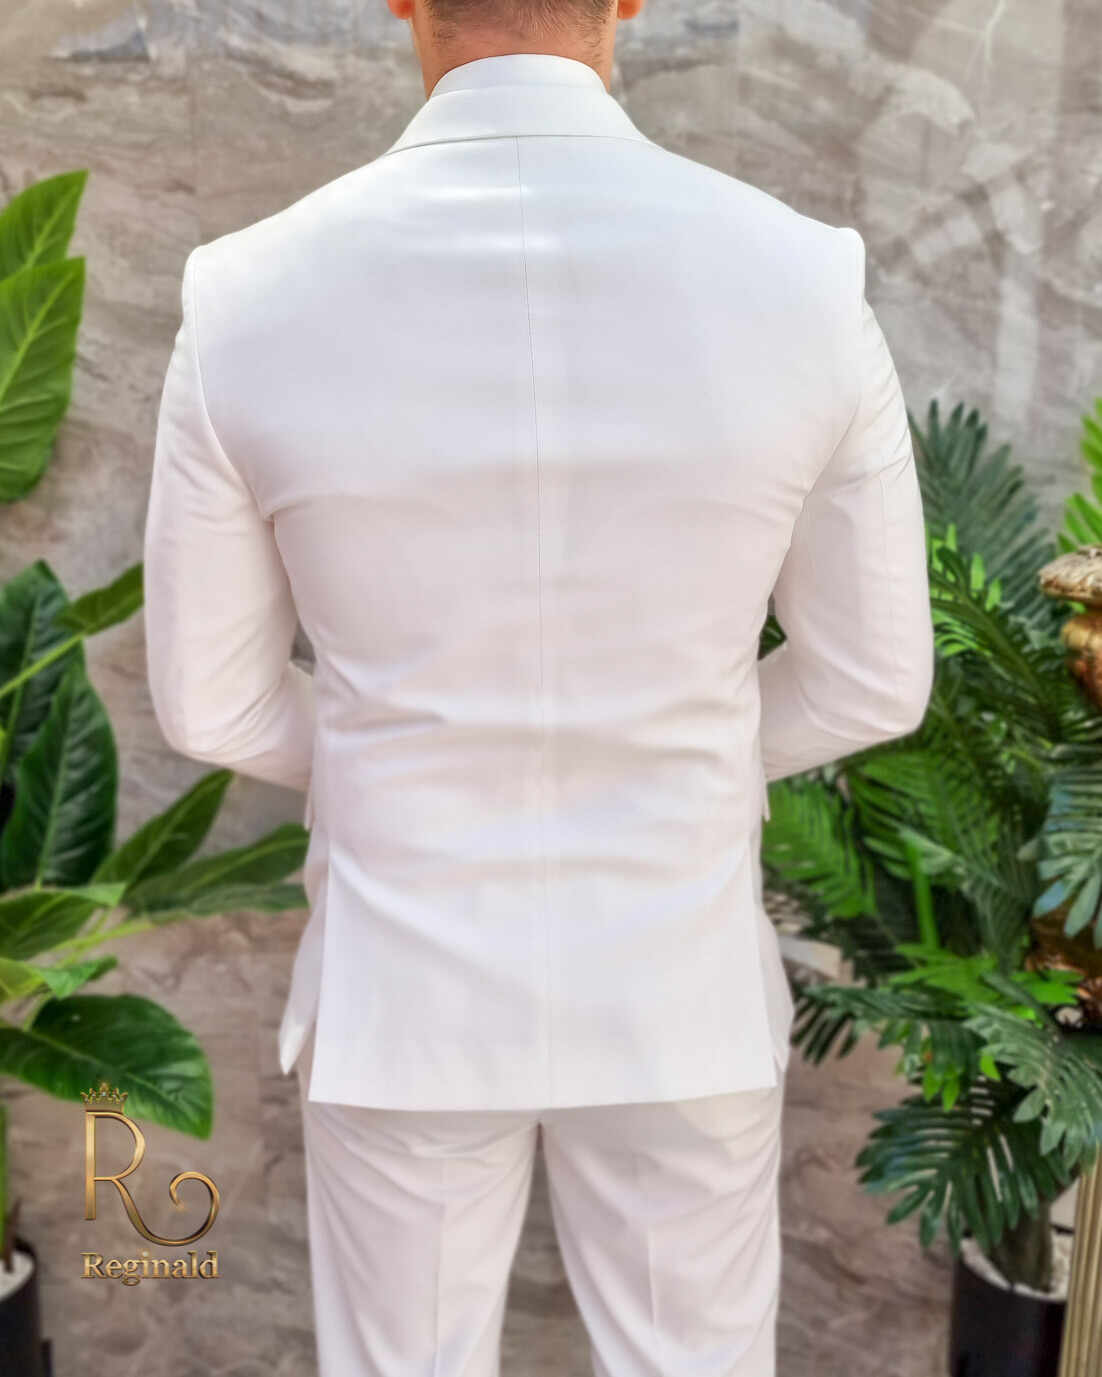 Costum de barbati alb cu butonii aurii: Sacou si Pantalon - C4081